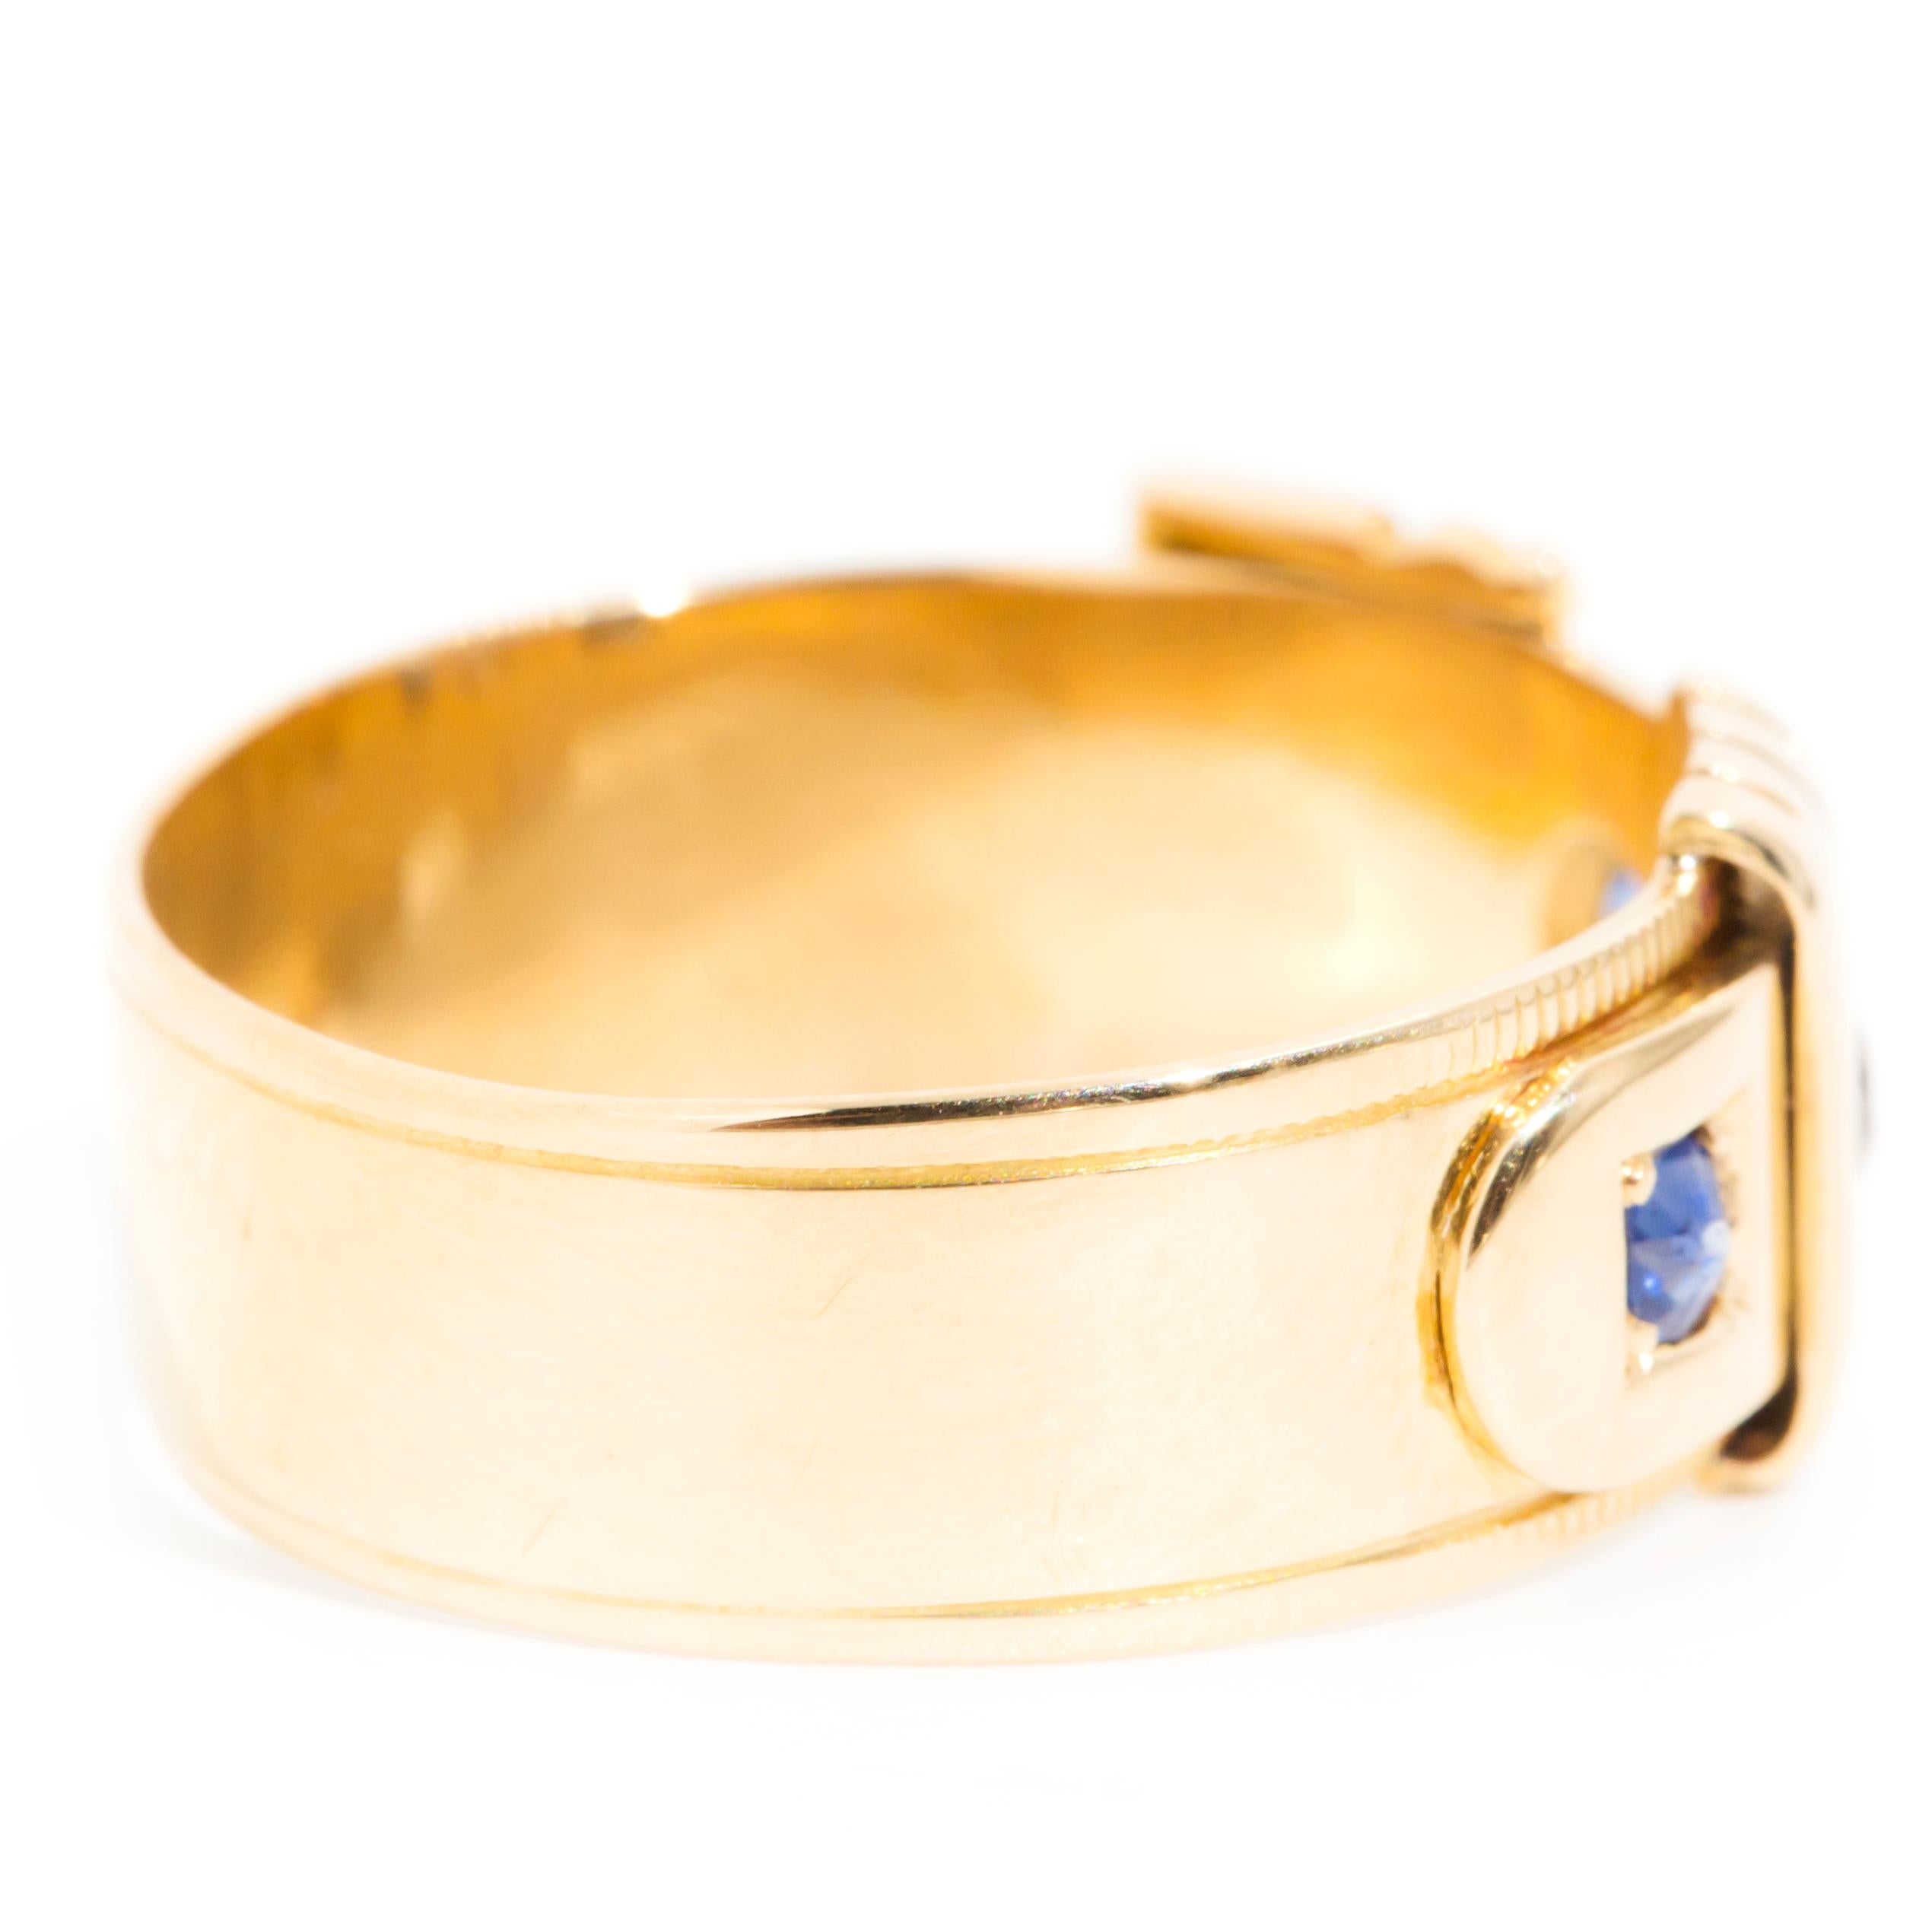 Round Cut 1890 Antique Diamond and Ceylon Sapphire Belt Ring in 18 Carat Yellow Gold